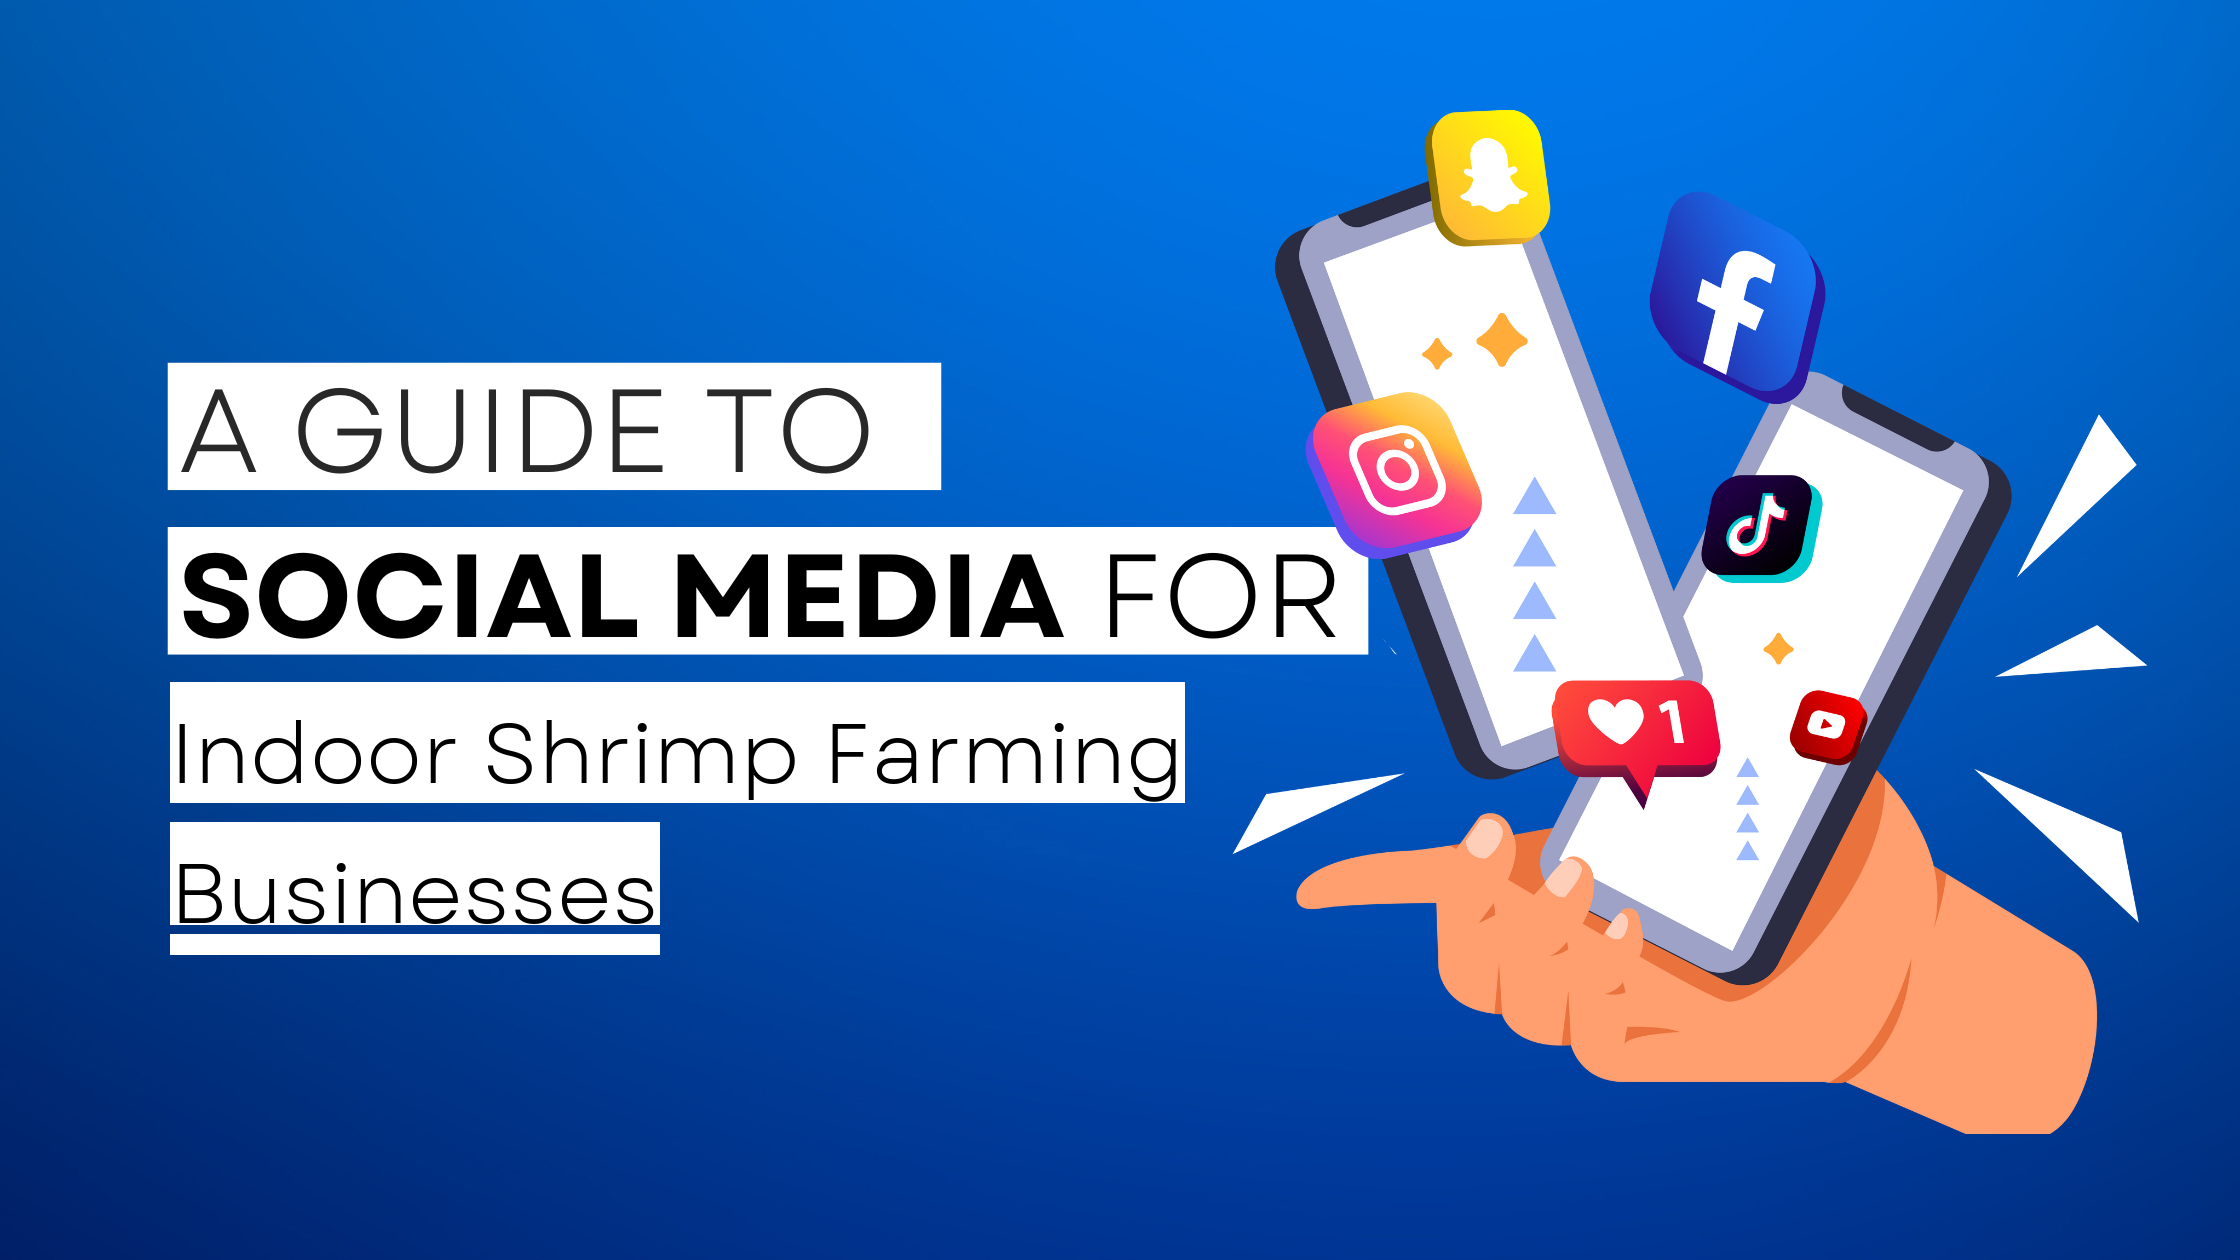 How to start Indoor Shrimp Farming on social media